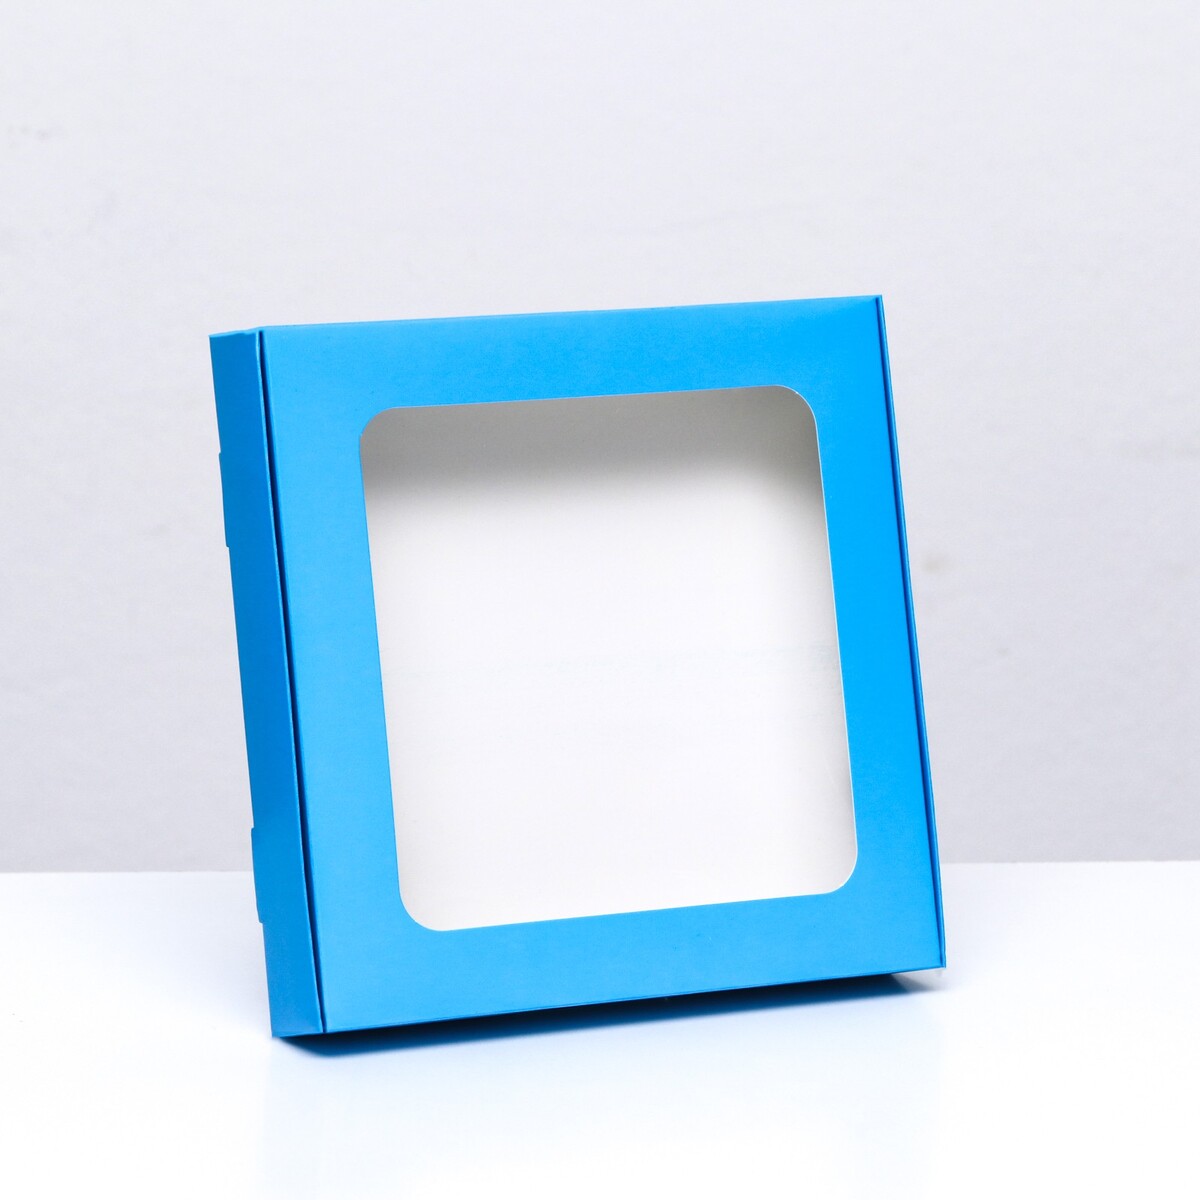 Коробка самосборная с окном синяя, 16 х 16 х 3 см коробка подарочная happy birthday синяя 15 15 8 5см картон